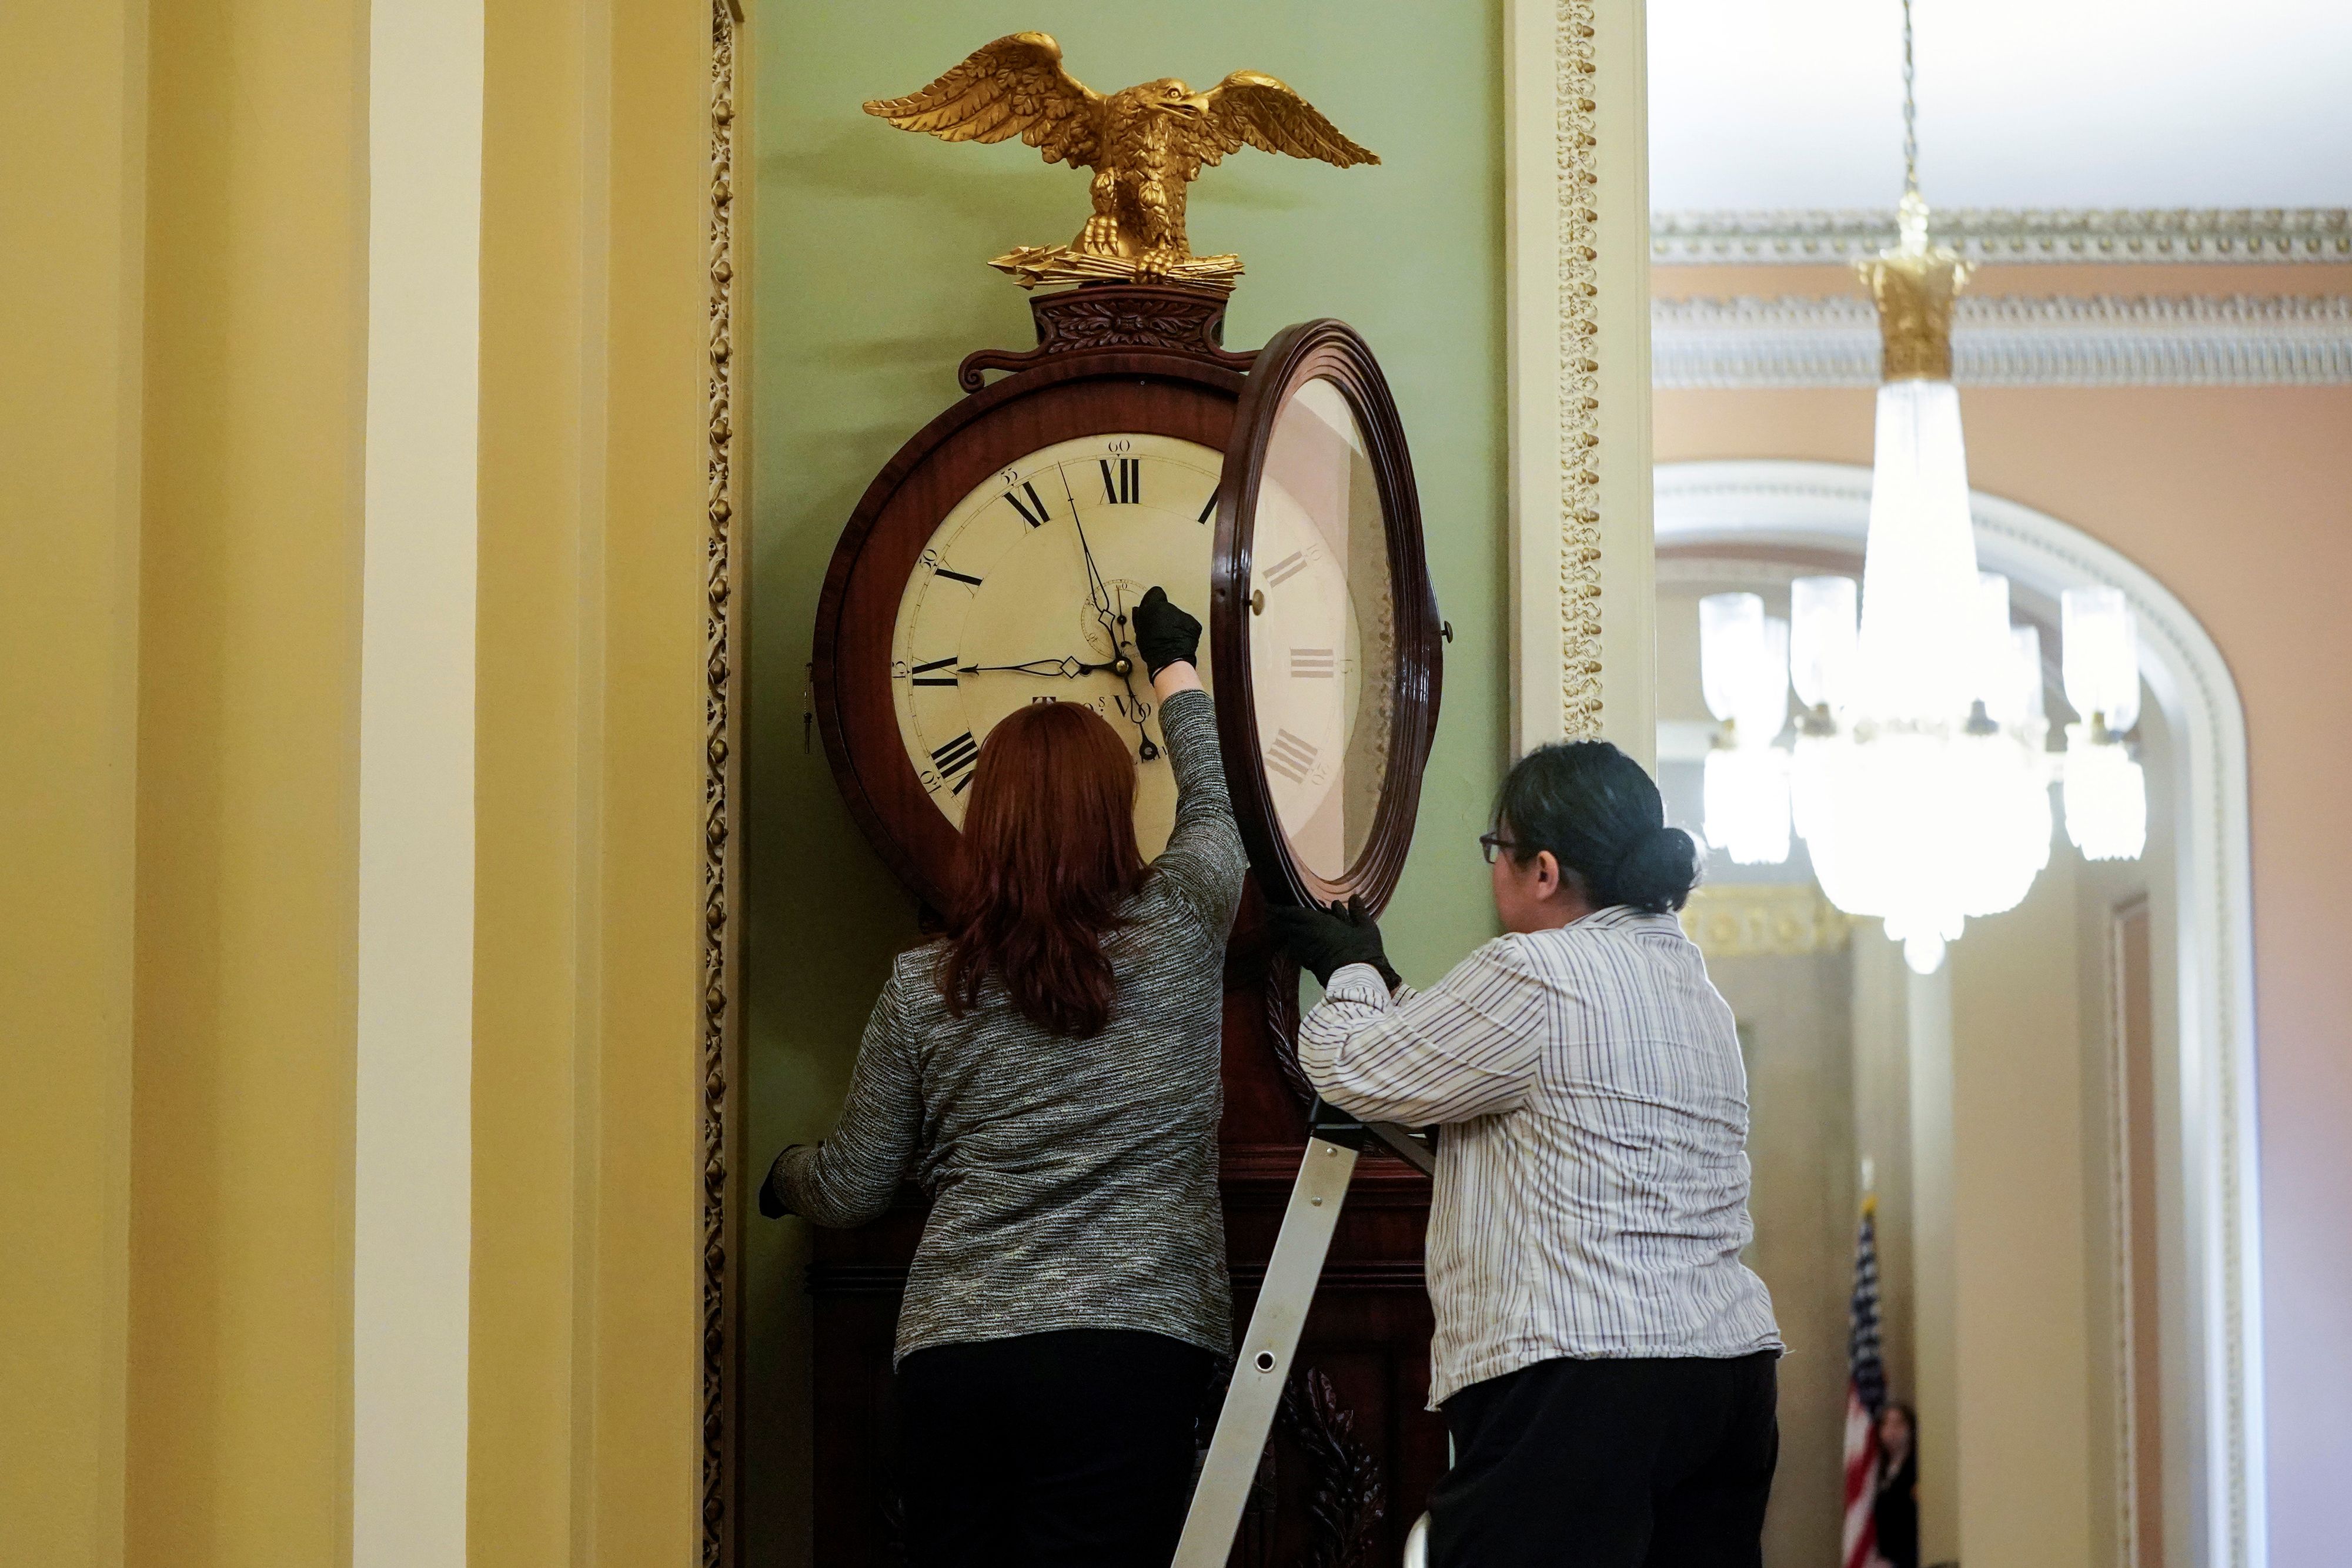 Permanent daylight saving time bill gets renewed push in Congress